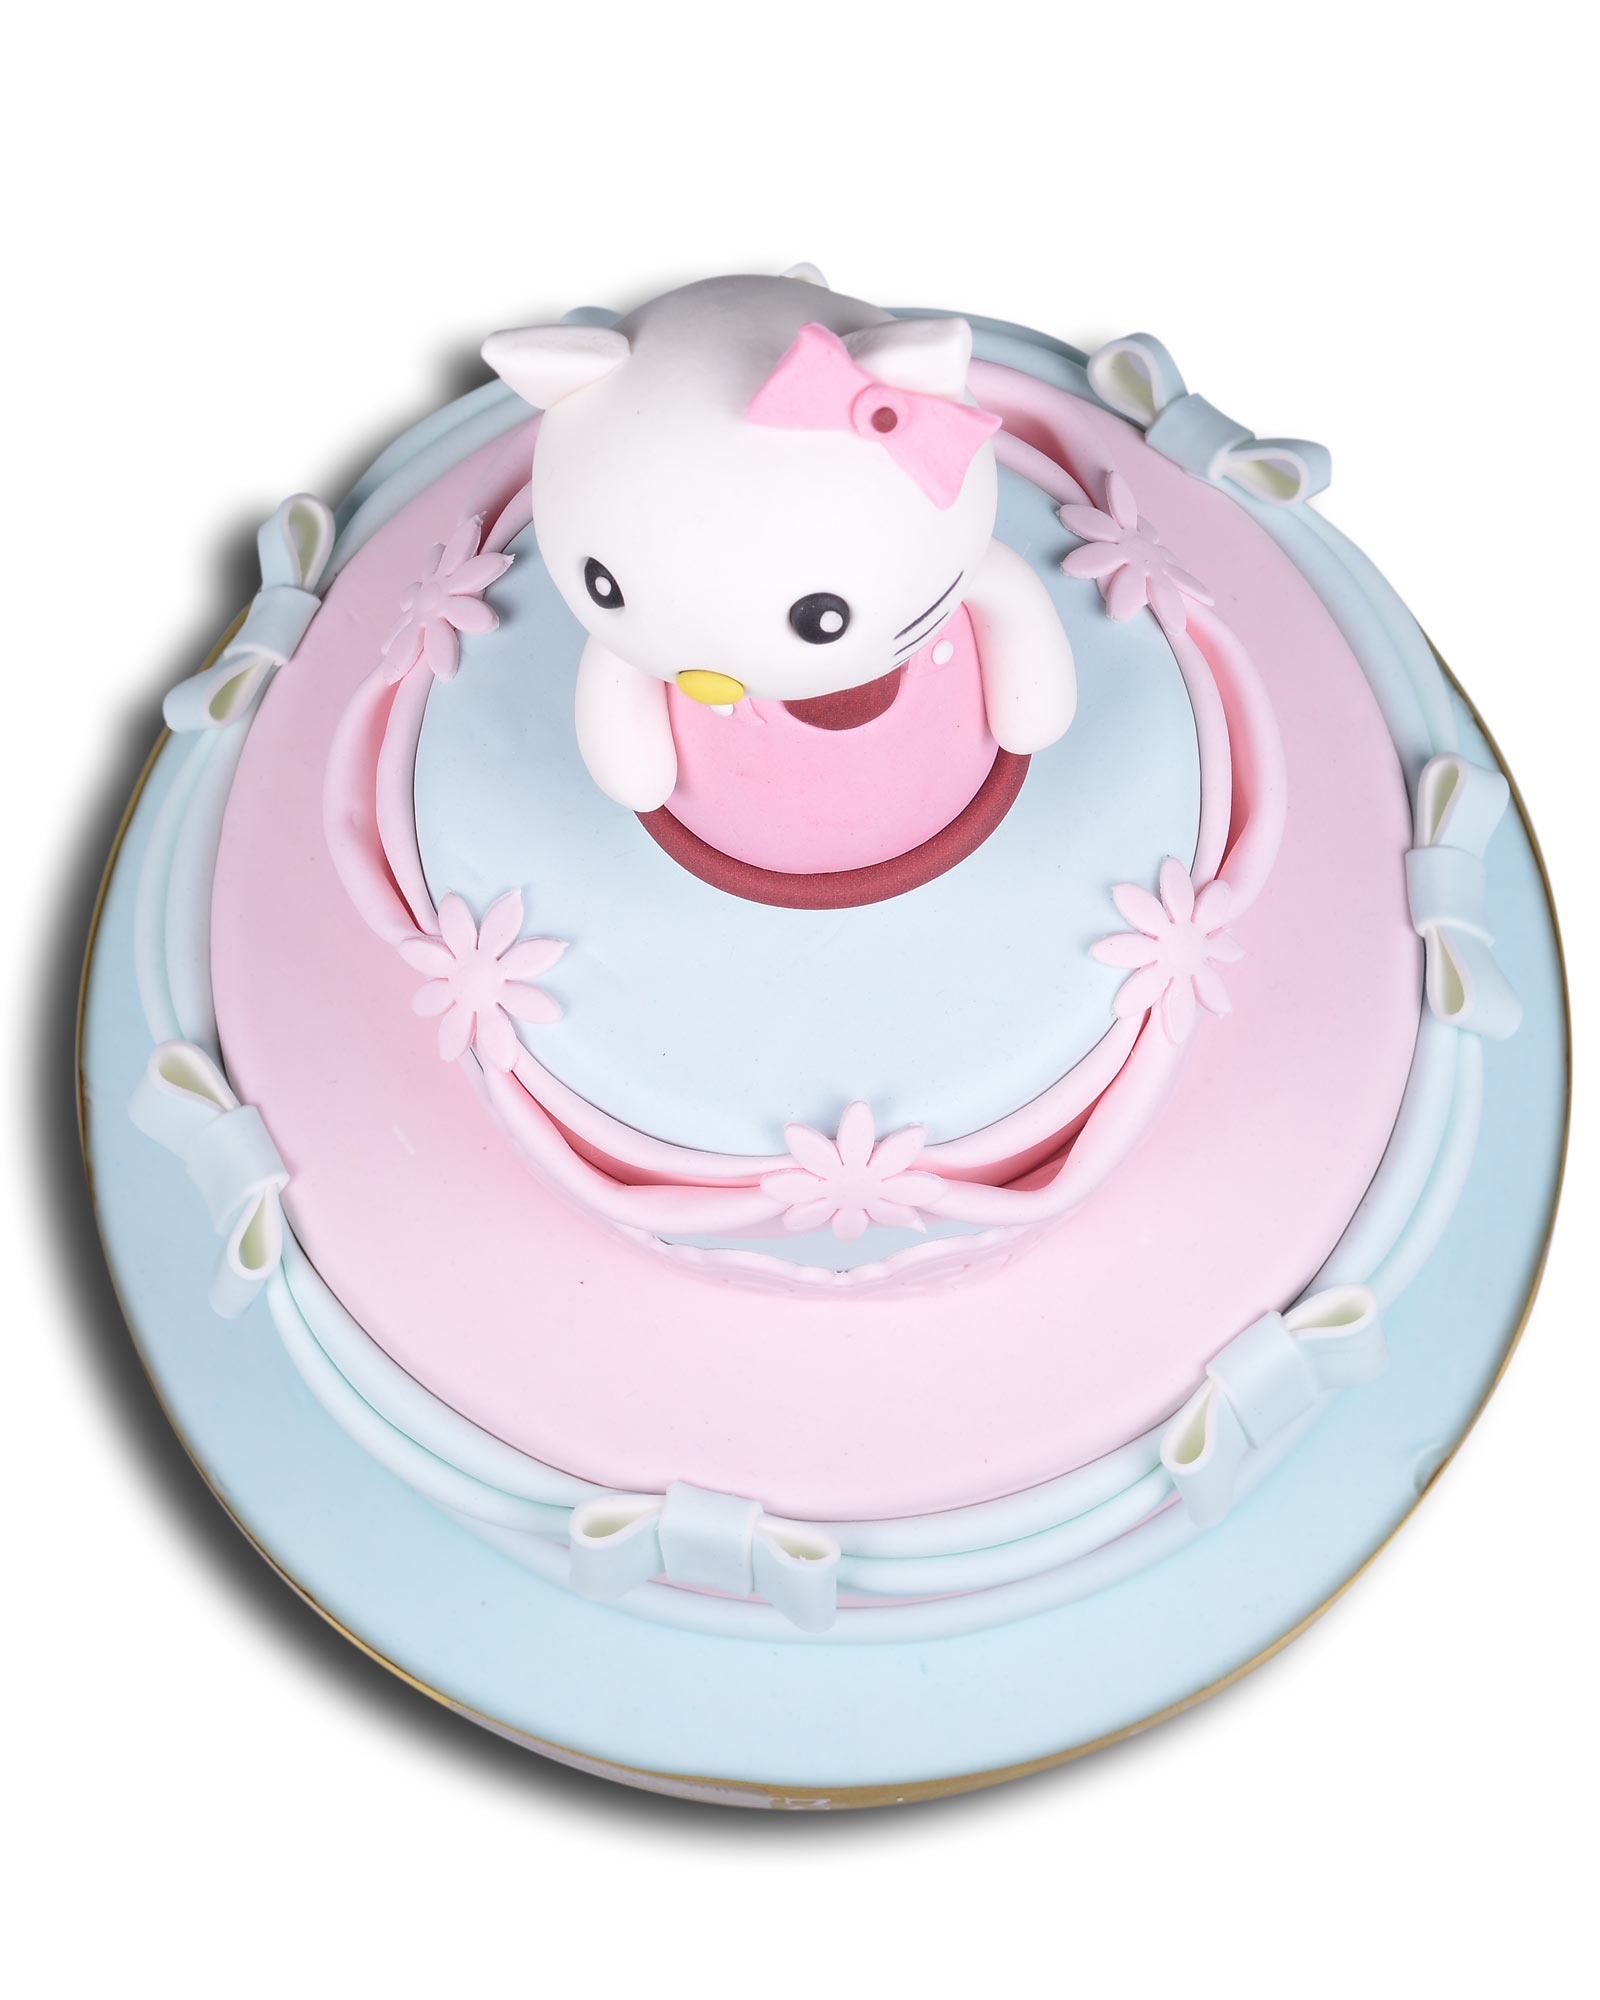 Sevimli Hello Kitty Doğum Günü Pastası   2